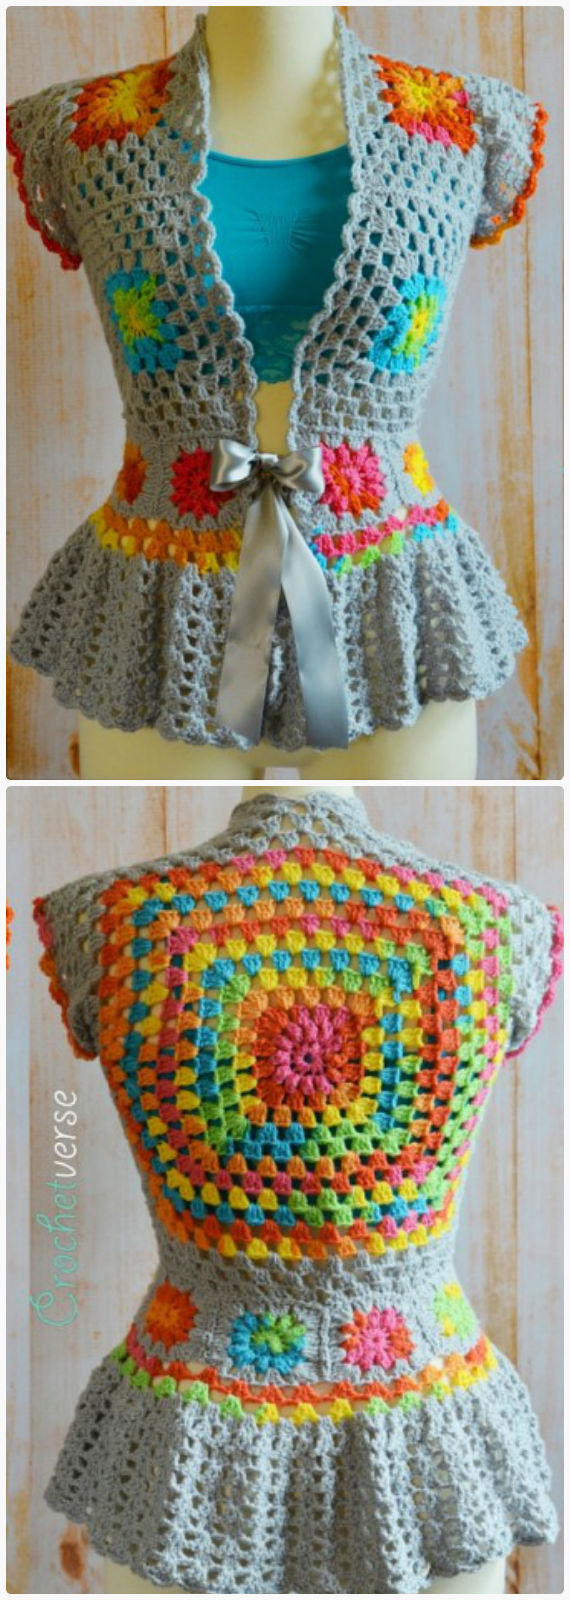 Crochet Garden Party Jacket Free Pattern - Crochet Women Capes & Poncho Free Patterns 